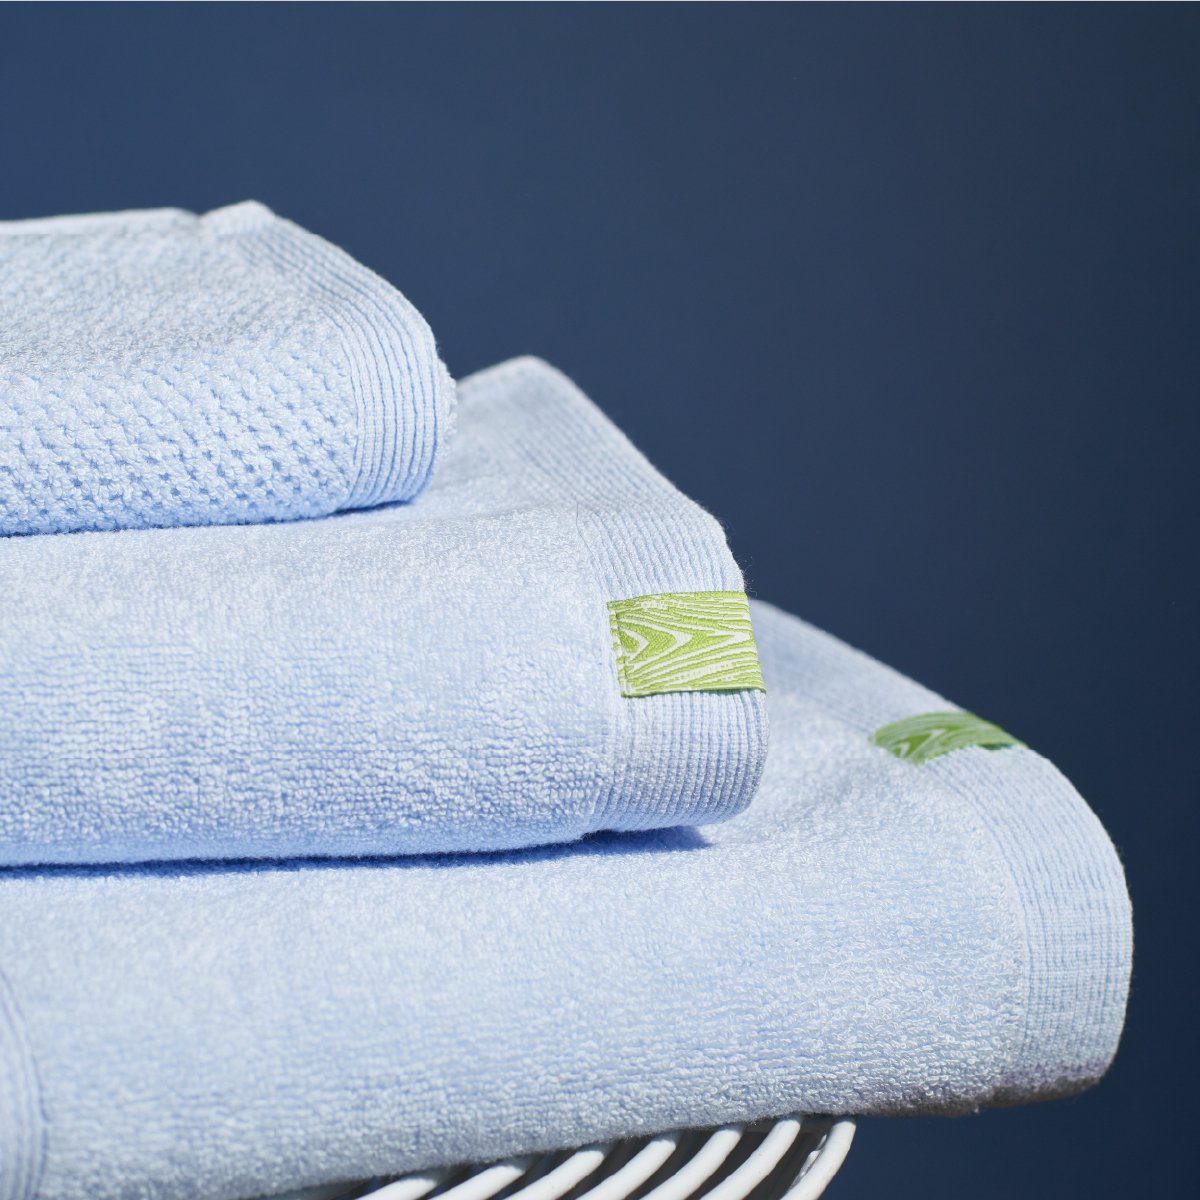 fair Daily schnell, Set, Sky umweltfreundlich, bleibt The Kushel hergestellt Blue Handtücher weich, trocknet